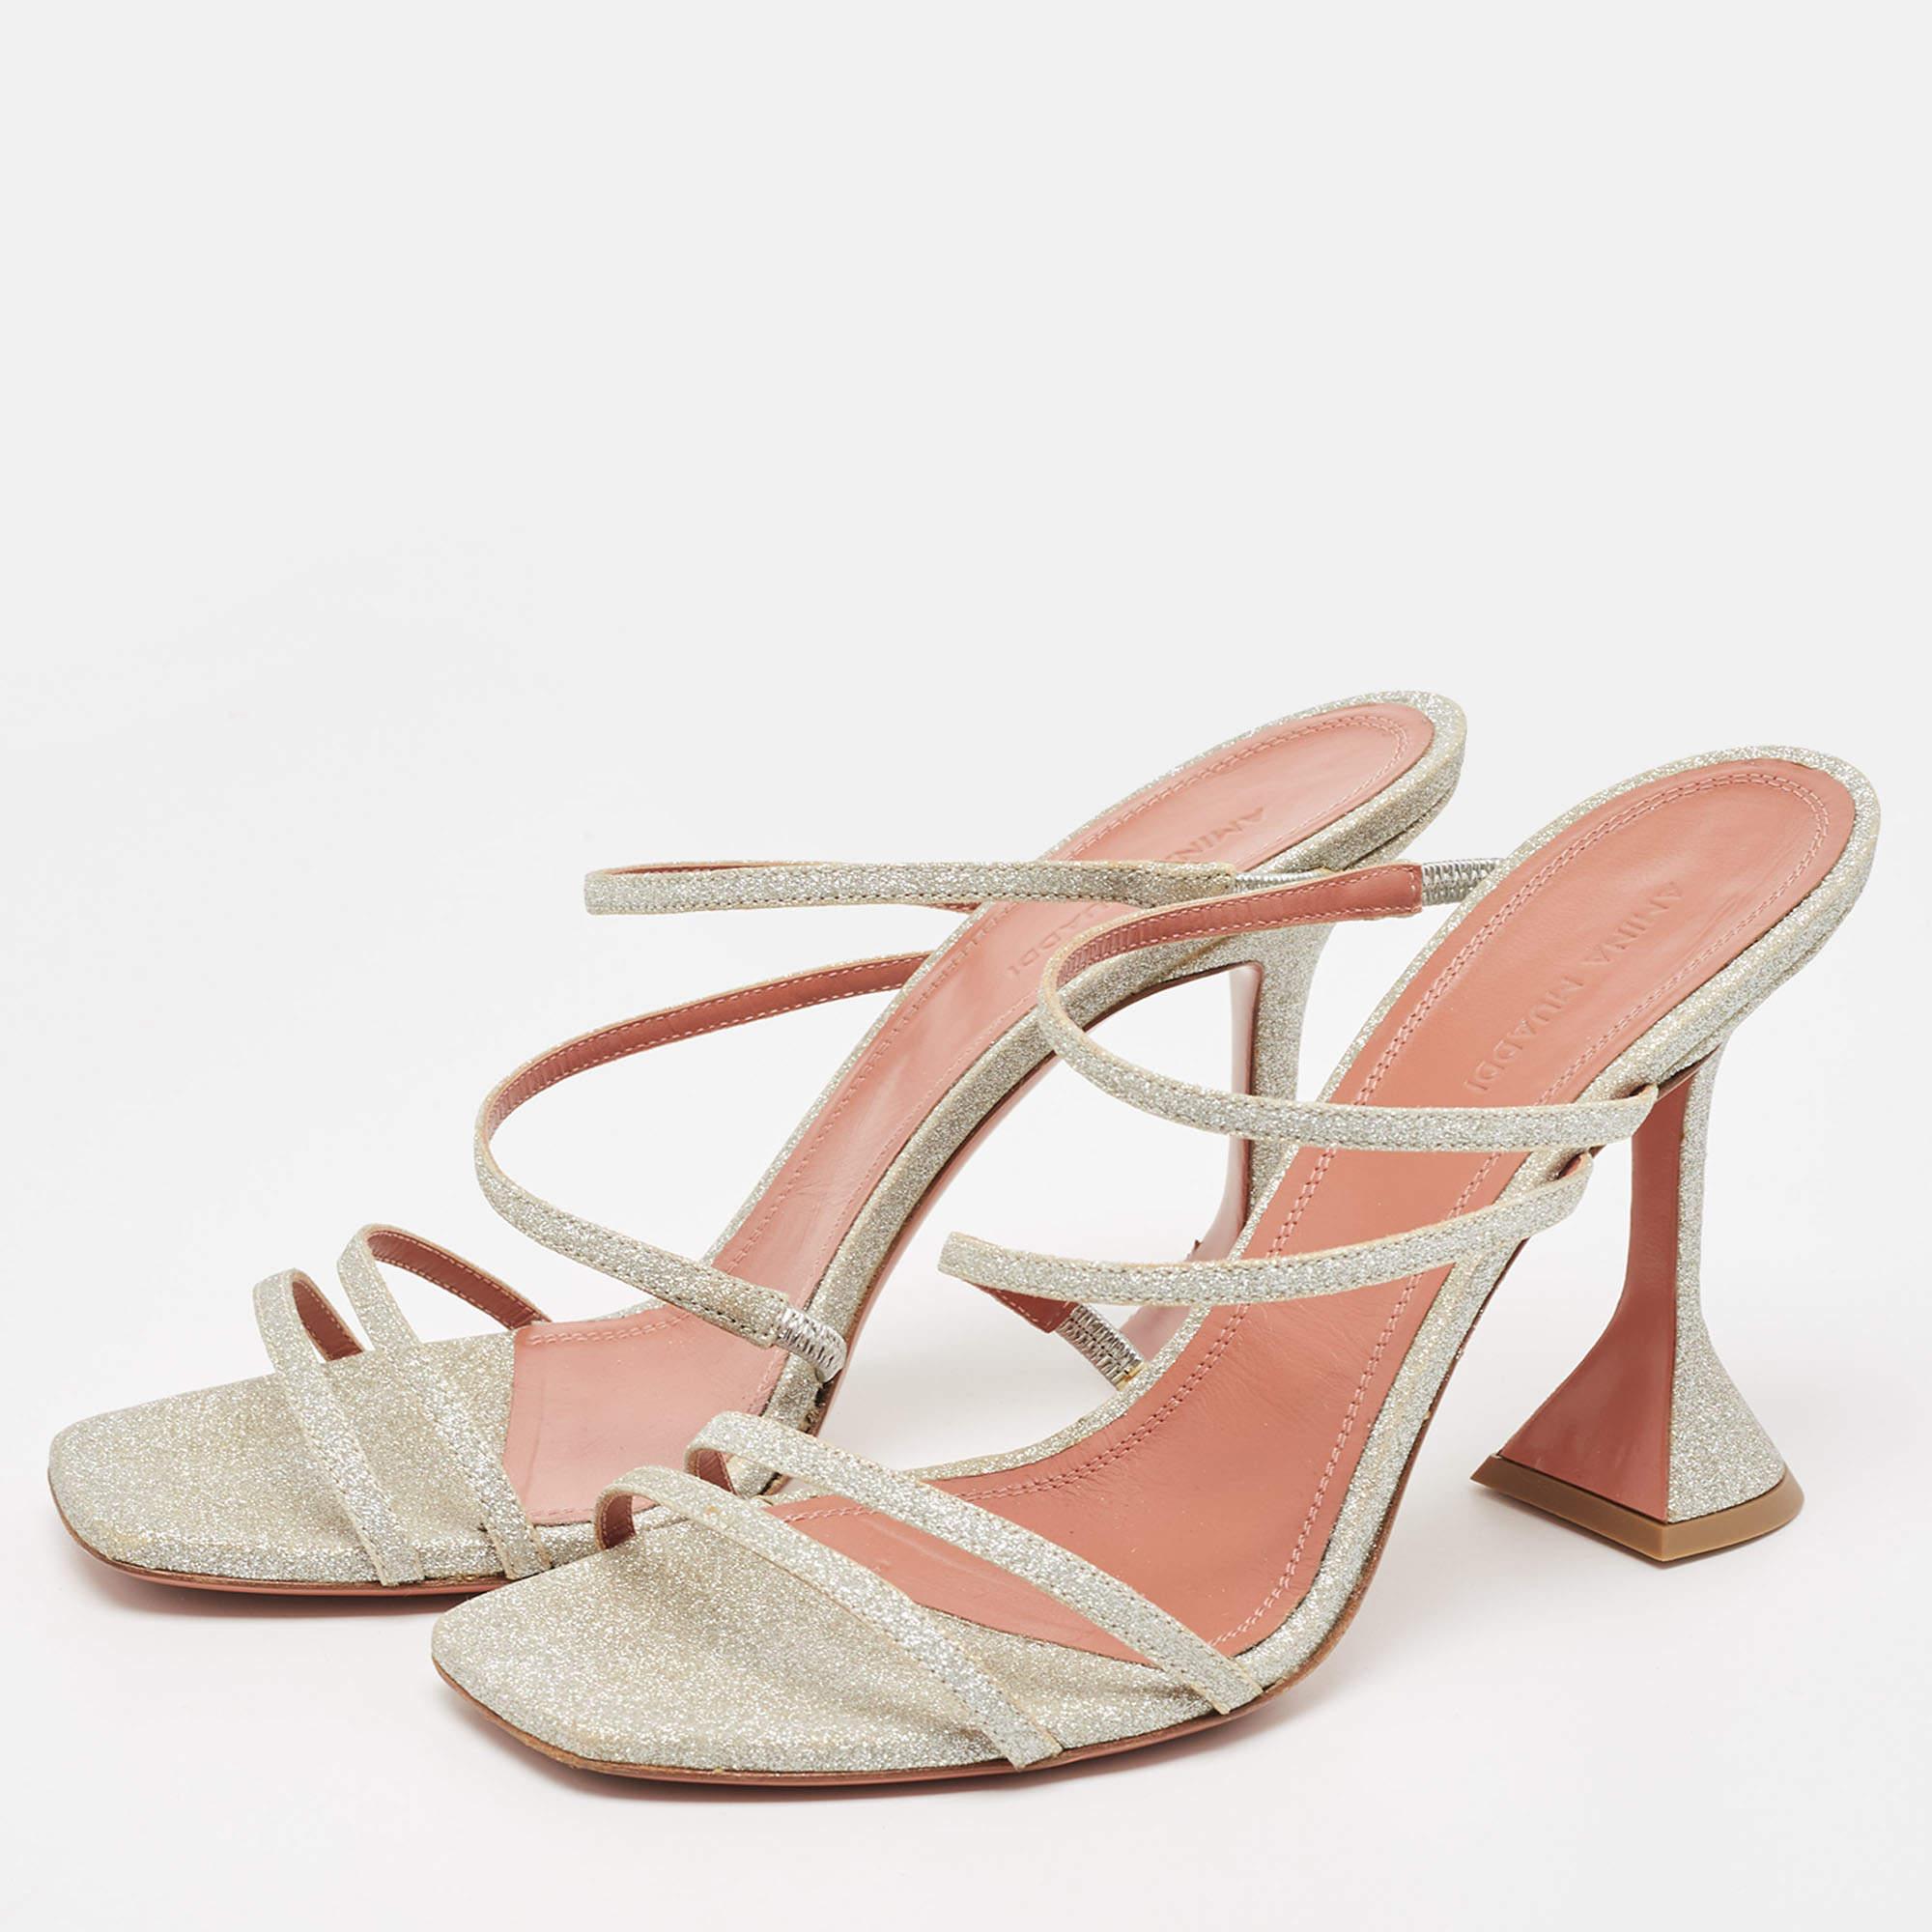 Amina Muaddi Silver Glitter Gilda Slide Sandals Size 40 1